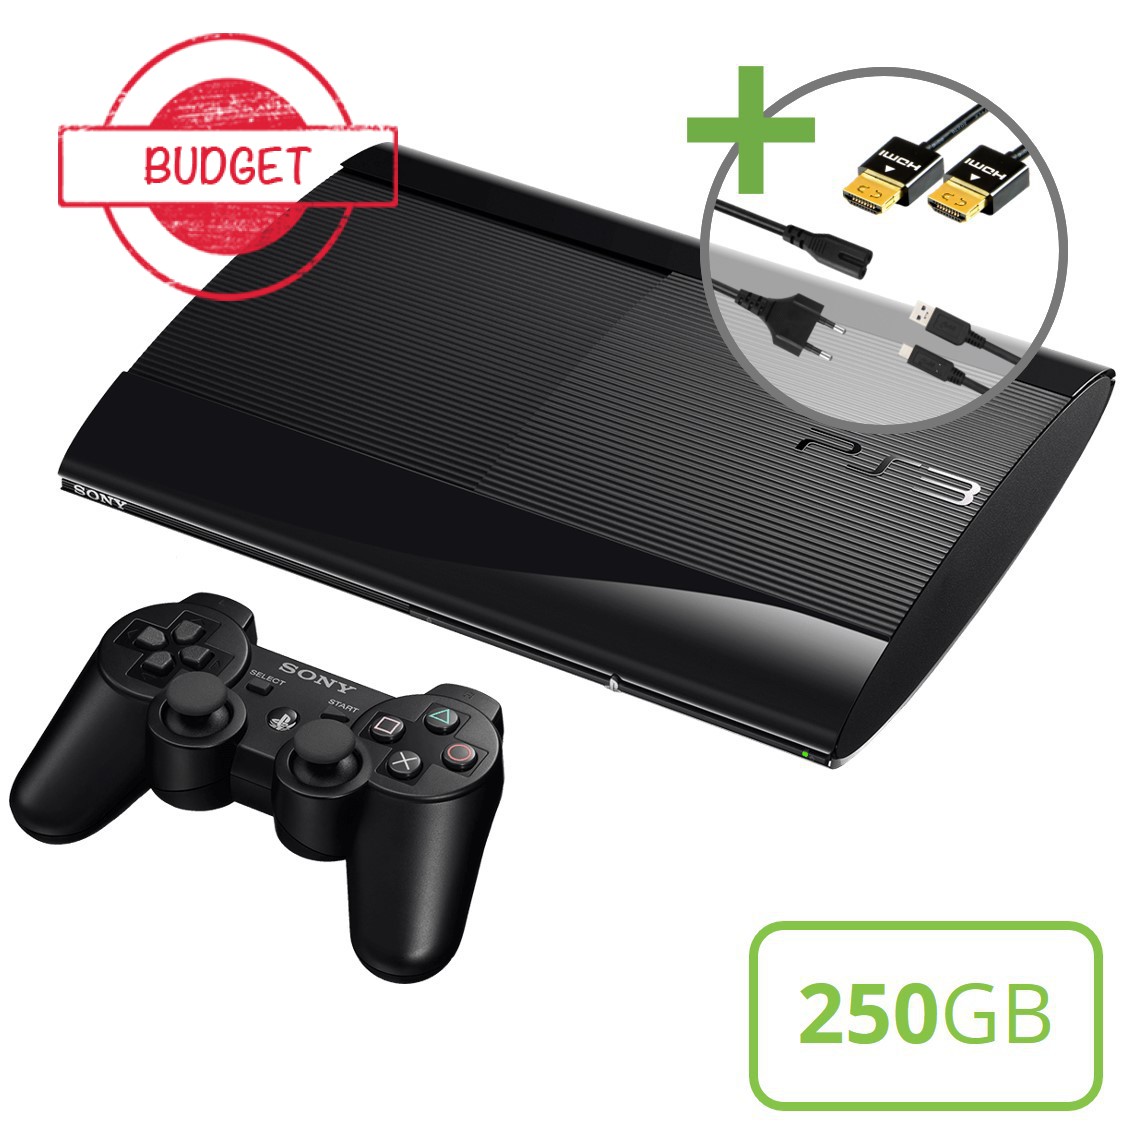 Sony PlayStation 3 Super Slim (250GB) Starter Pack - DualShock Edition - Budget - Playstation 3 Hardware